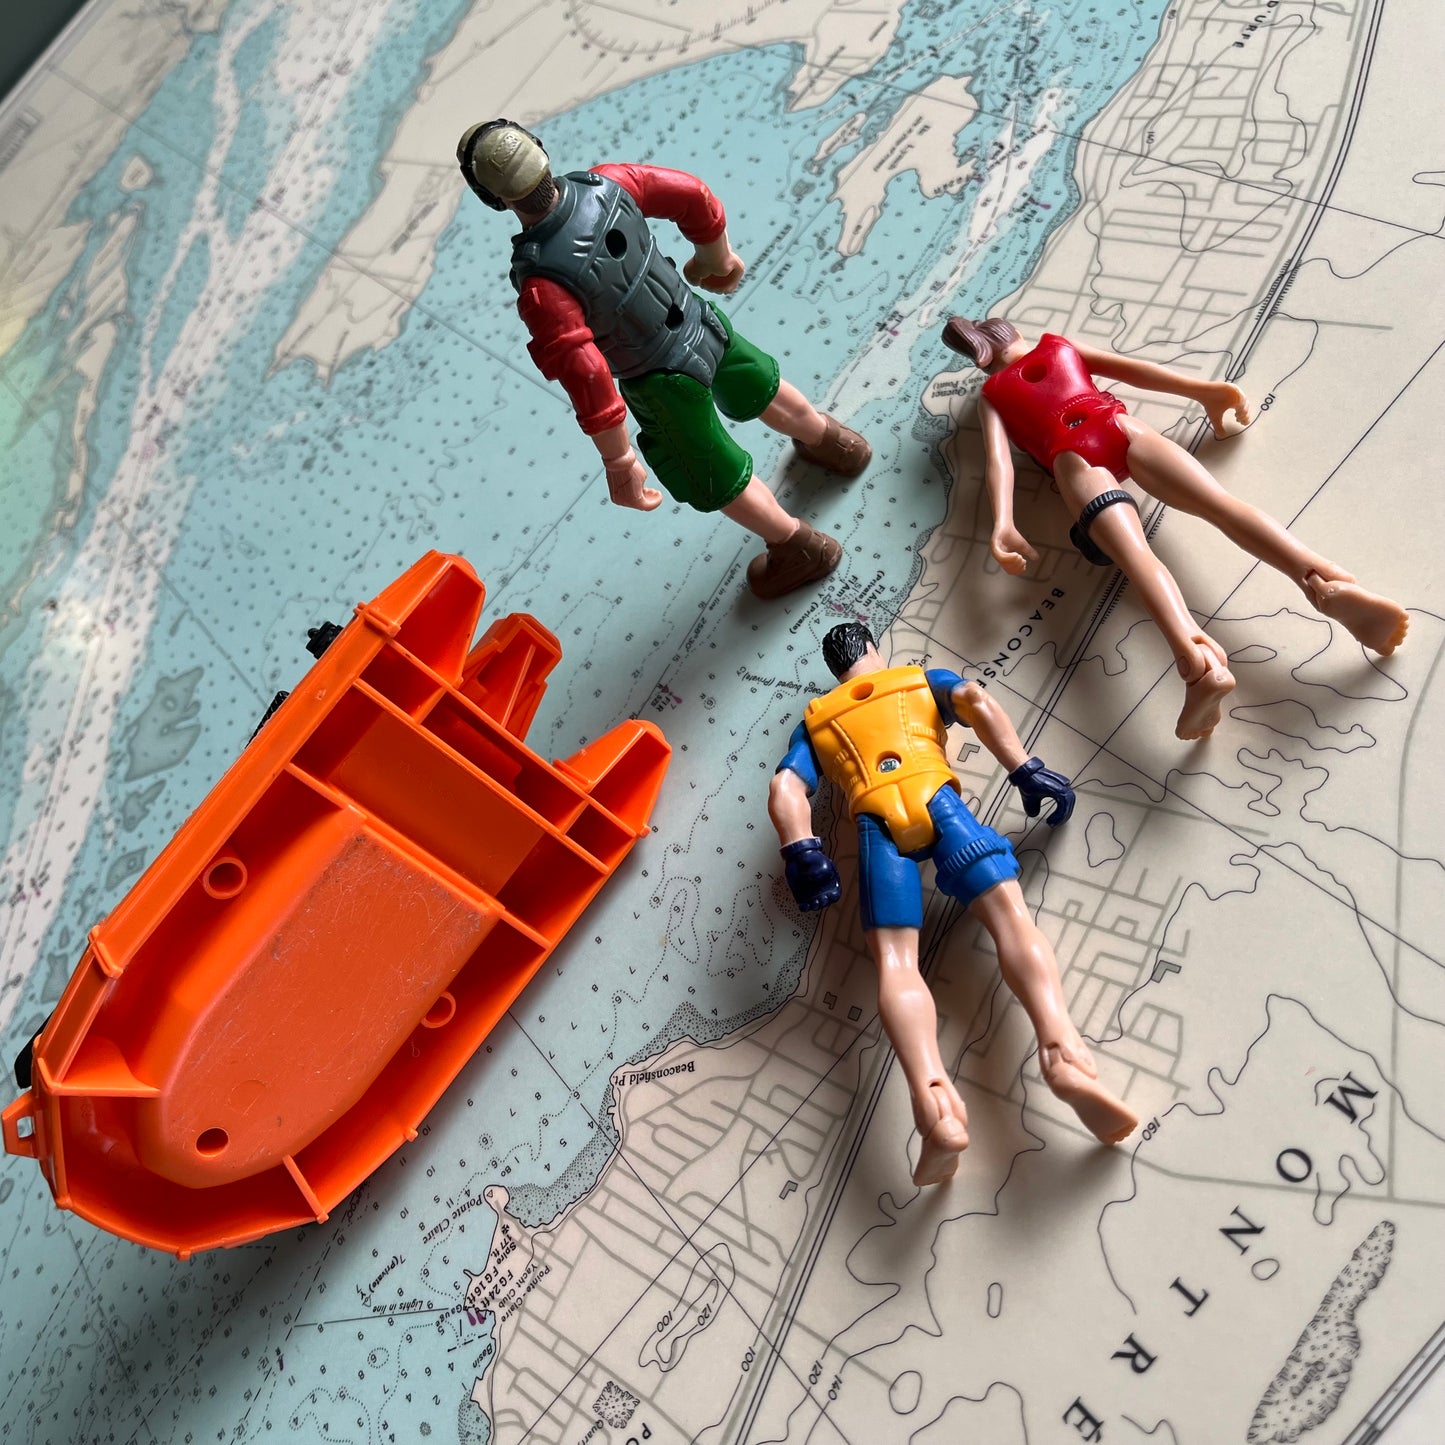 Vintage 70s Adventure People (3) with Raft / Lifeboat